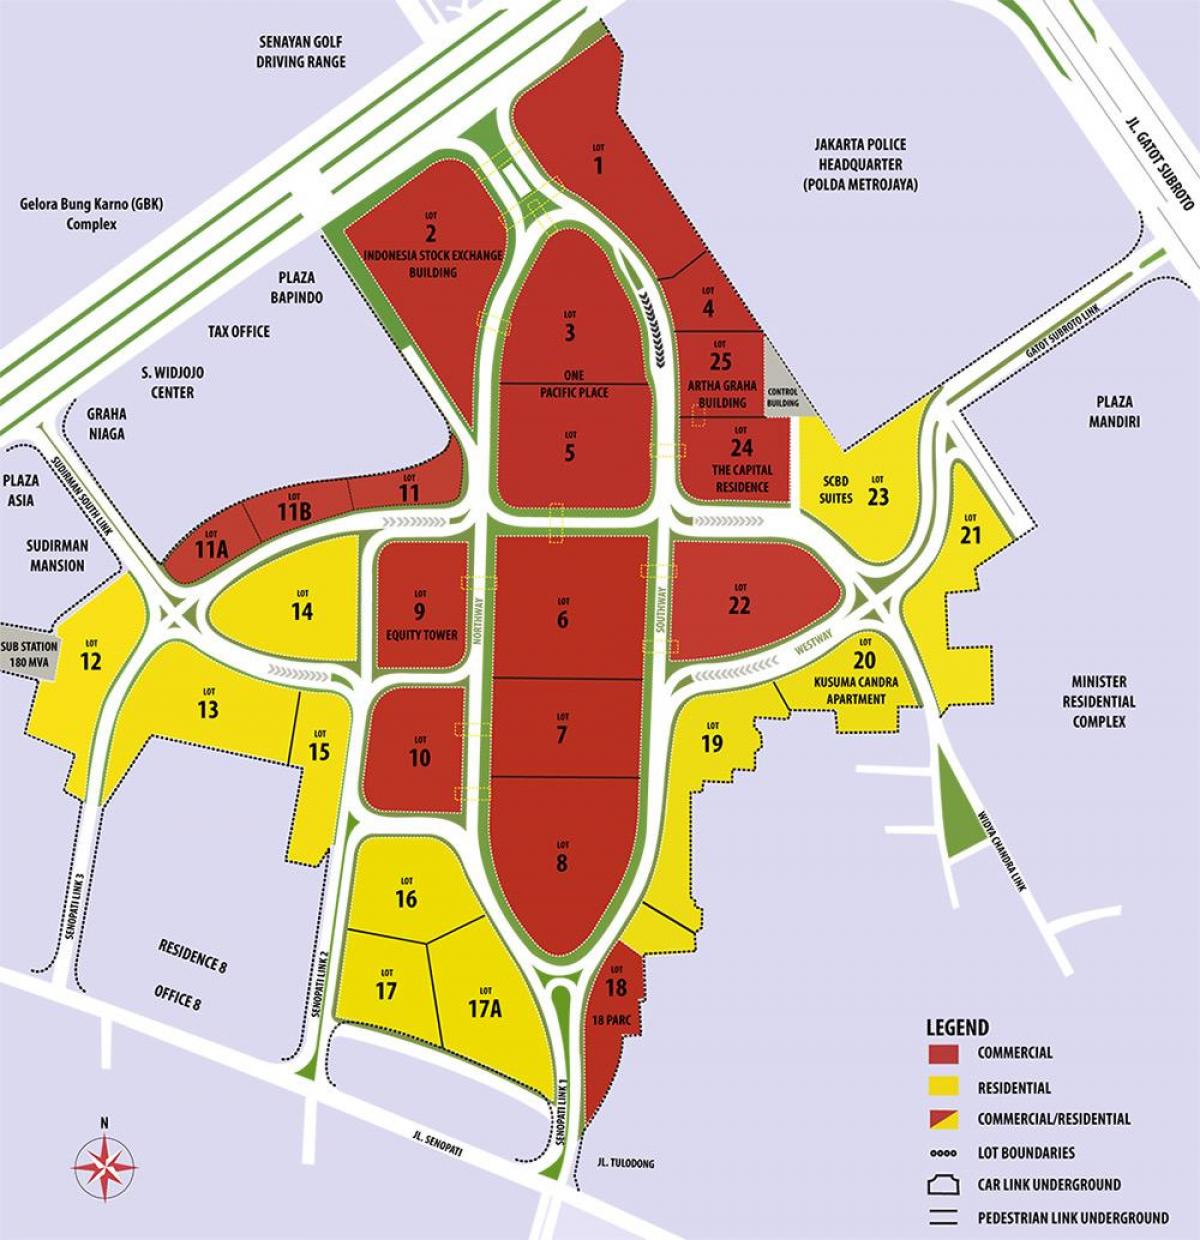 kort over scbd Jakarta